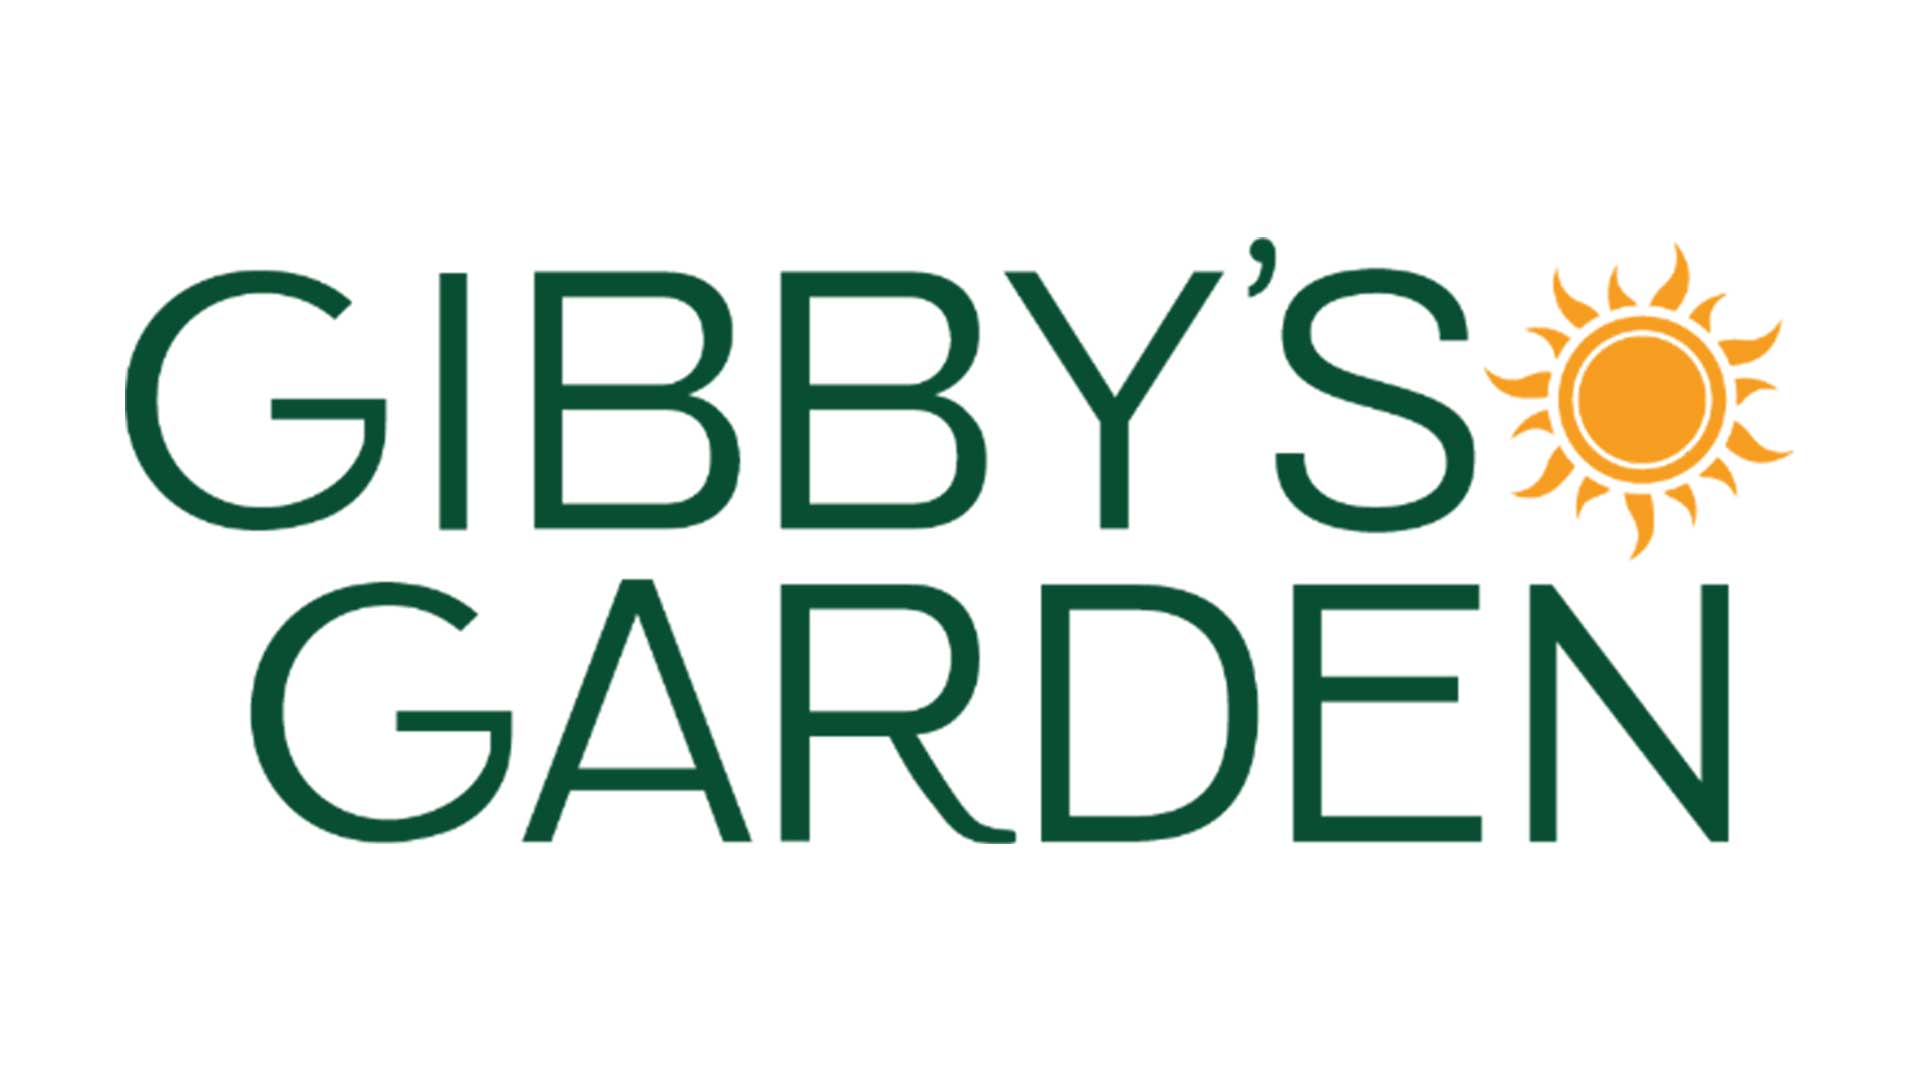 Gibby's garden logo